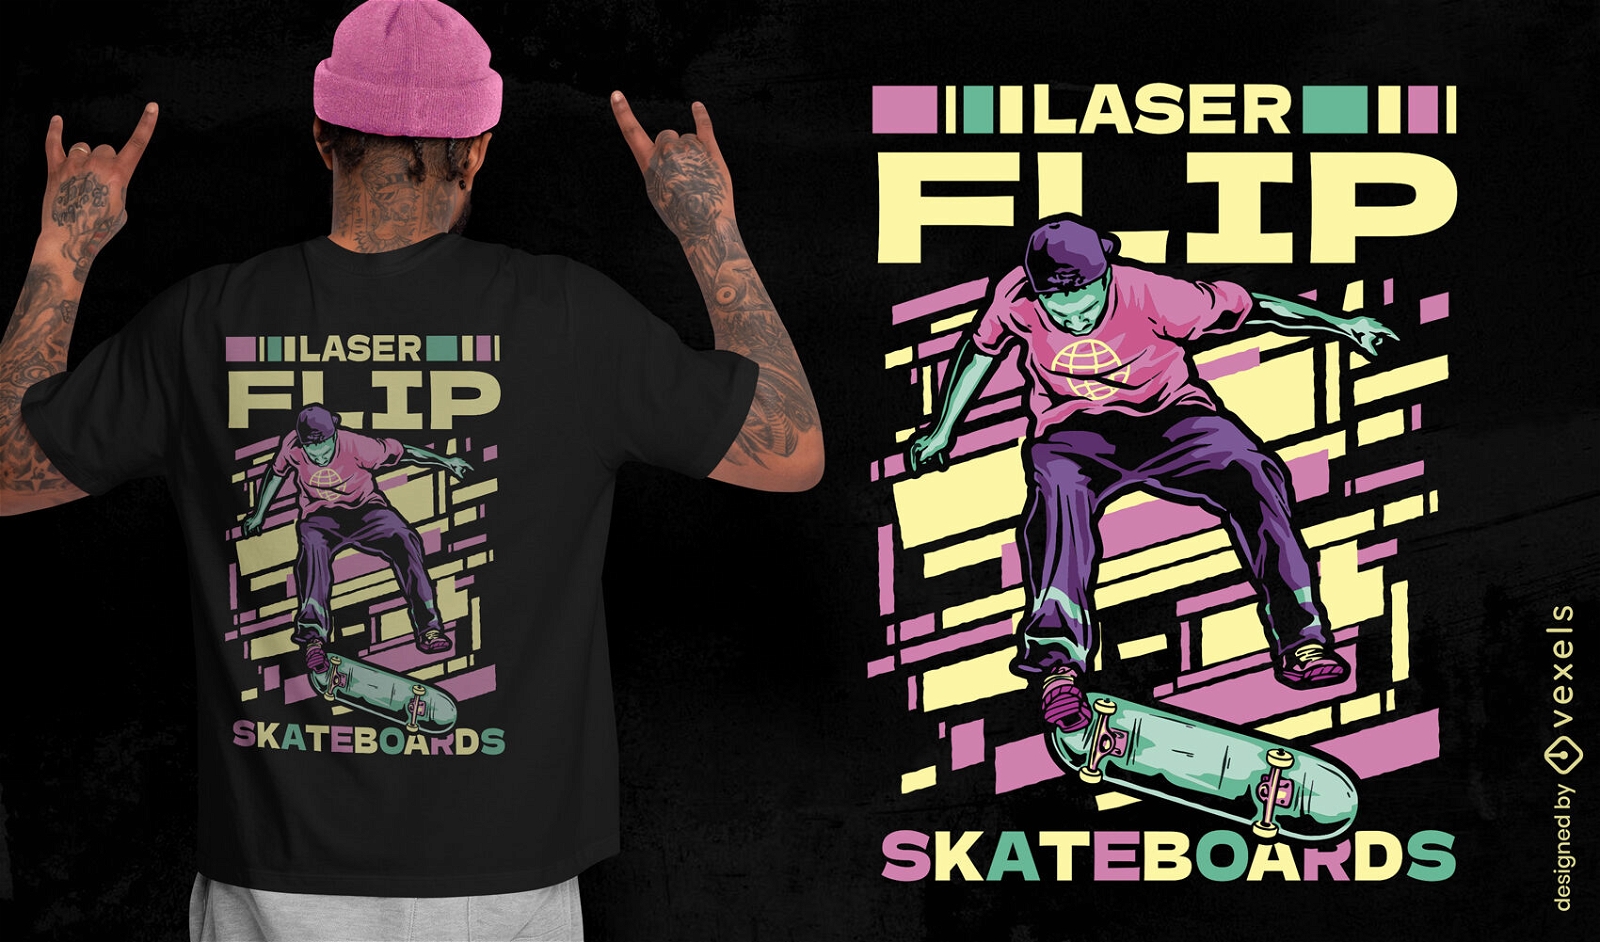 Laser flip skateboards t-shirt design